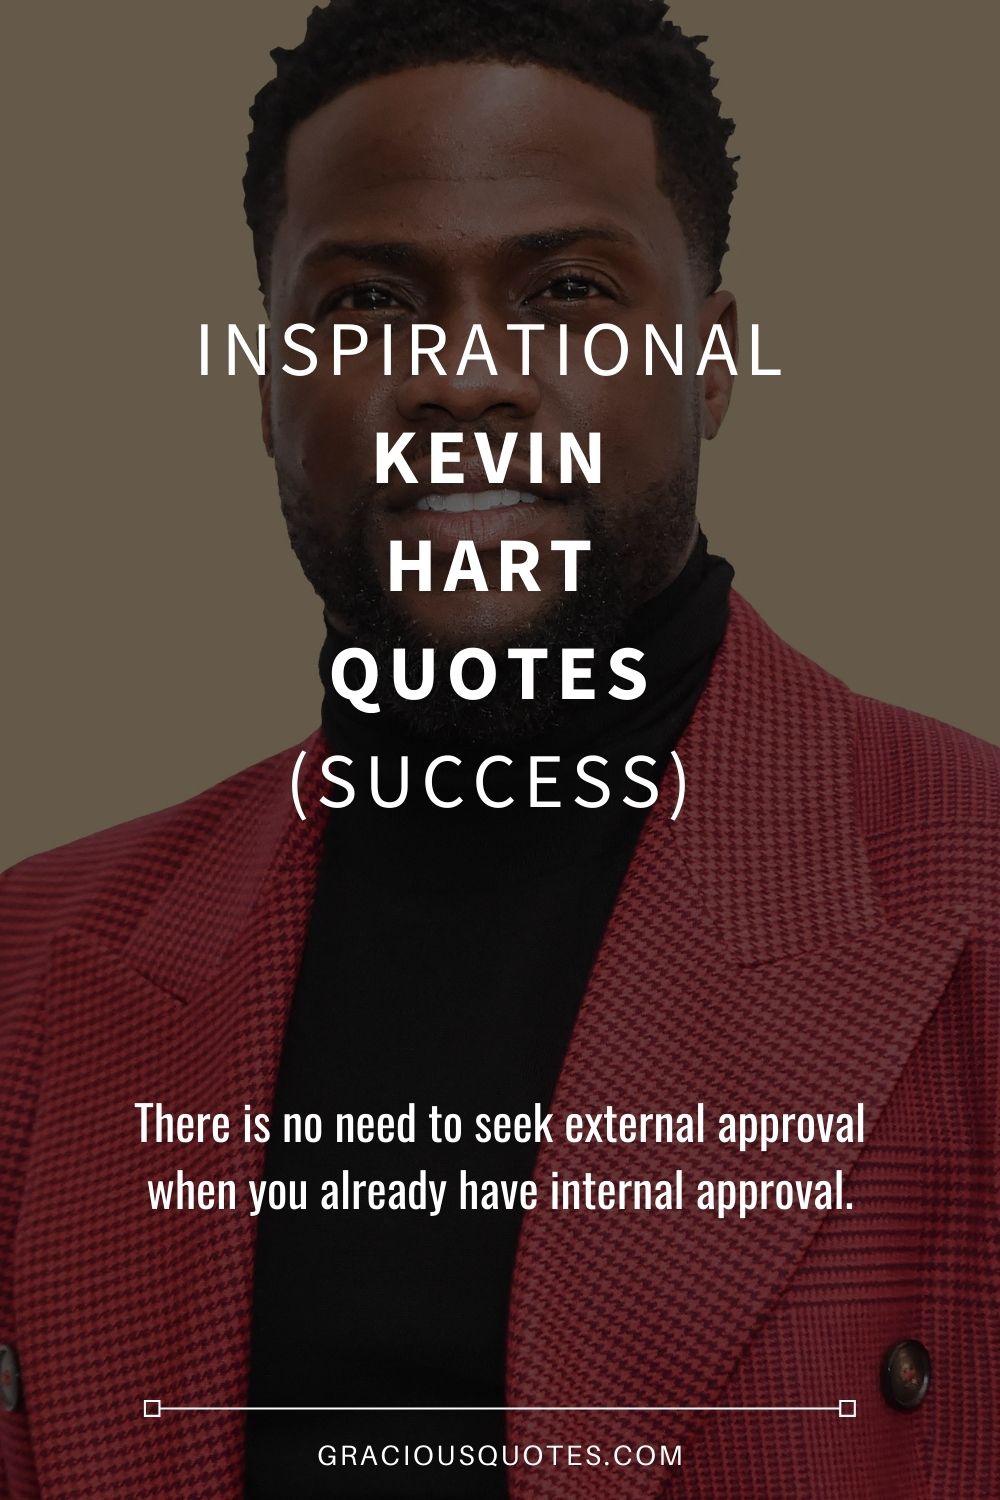 Inspirational Kevin Hart Quotes (SUCCESS) - Gracious Quotes